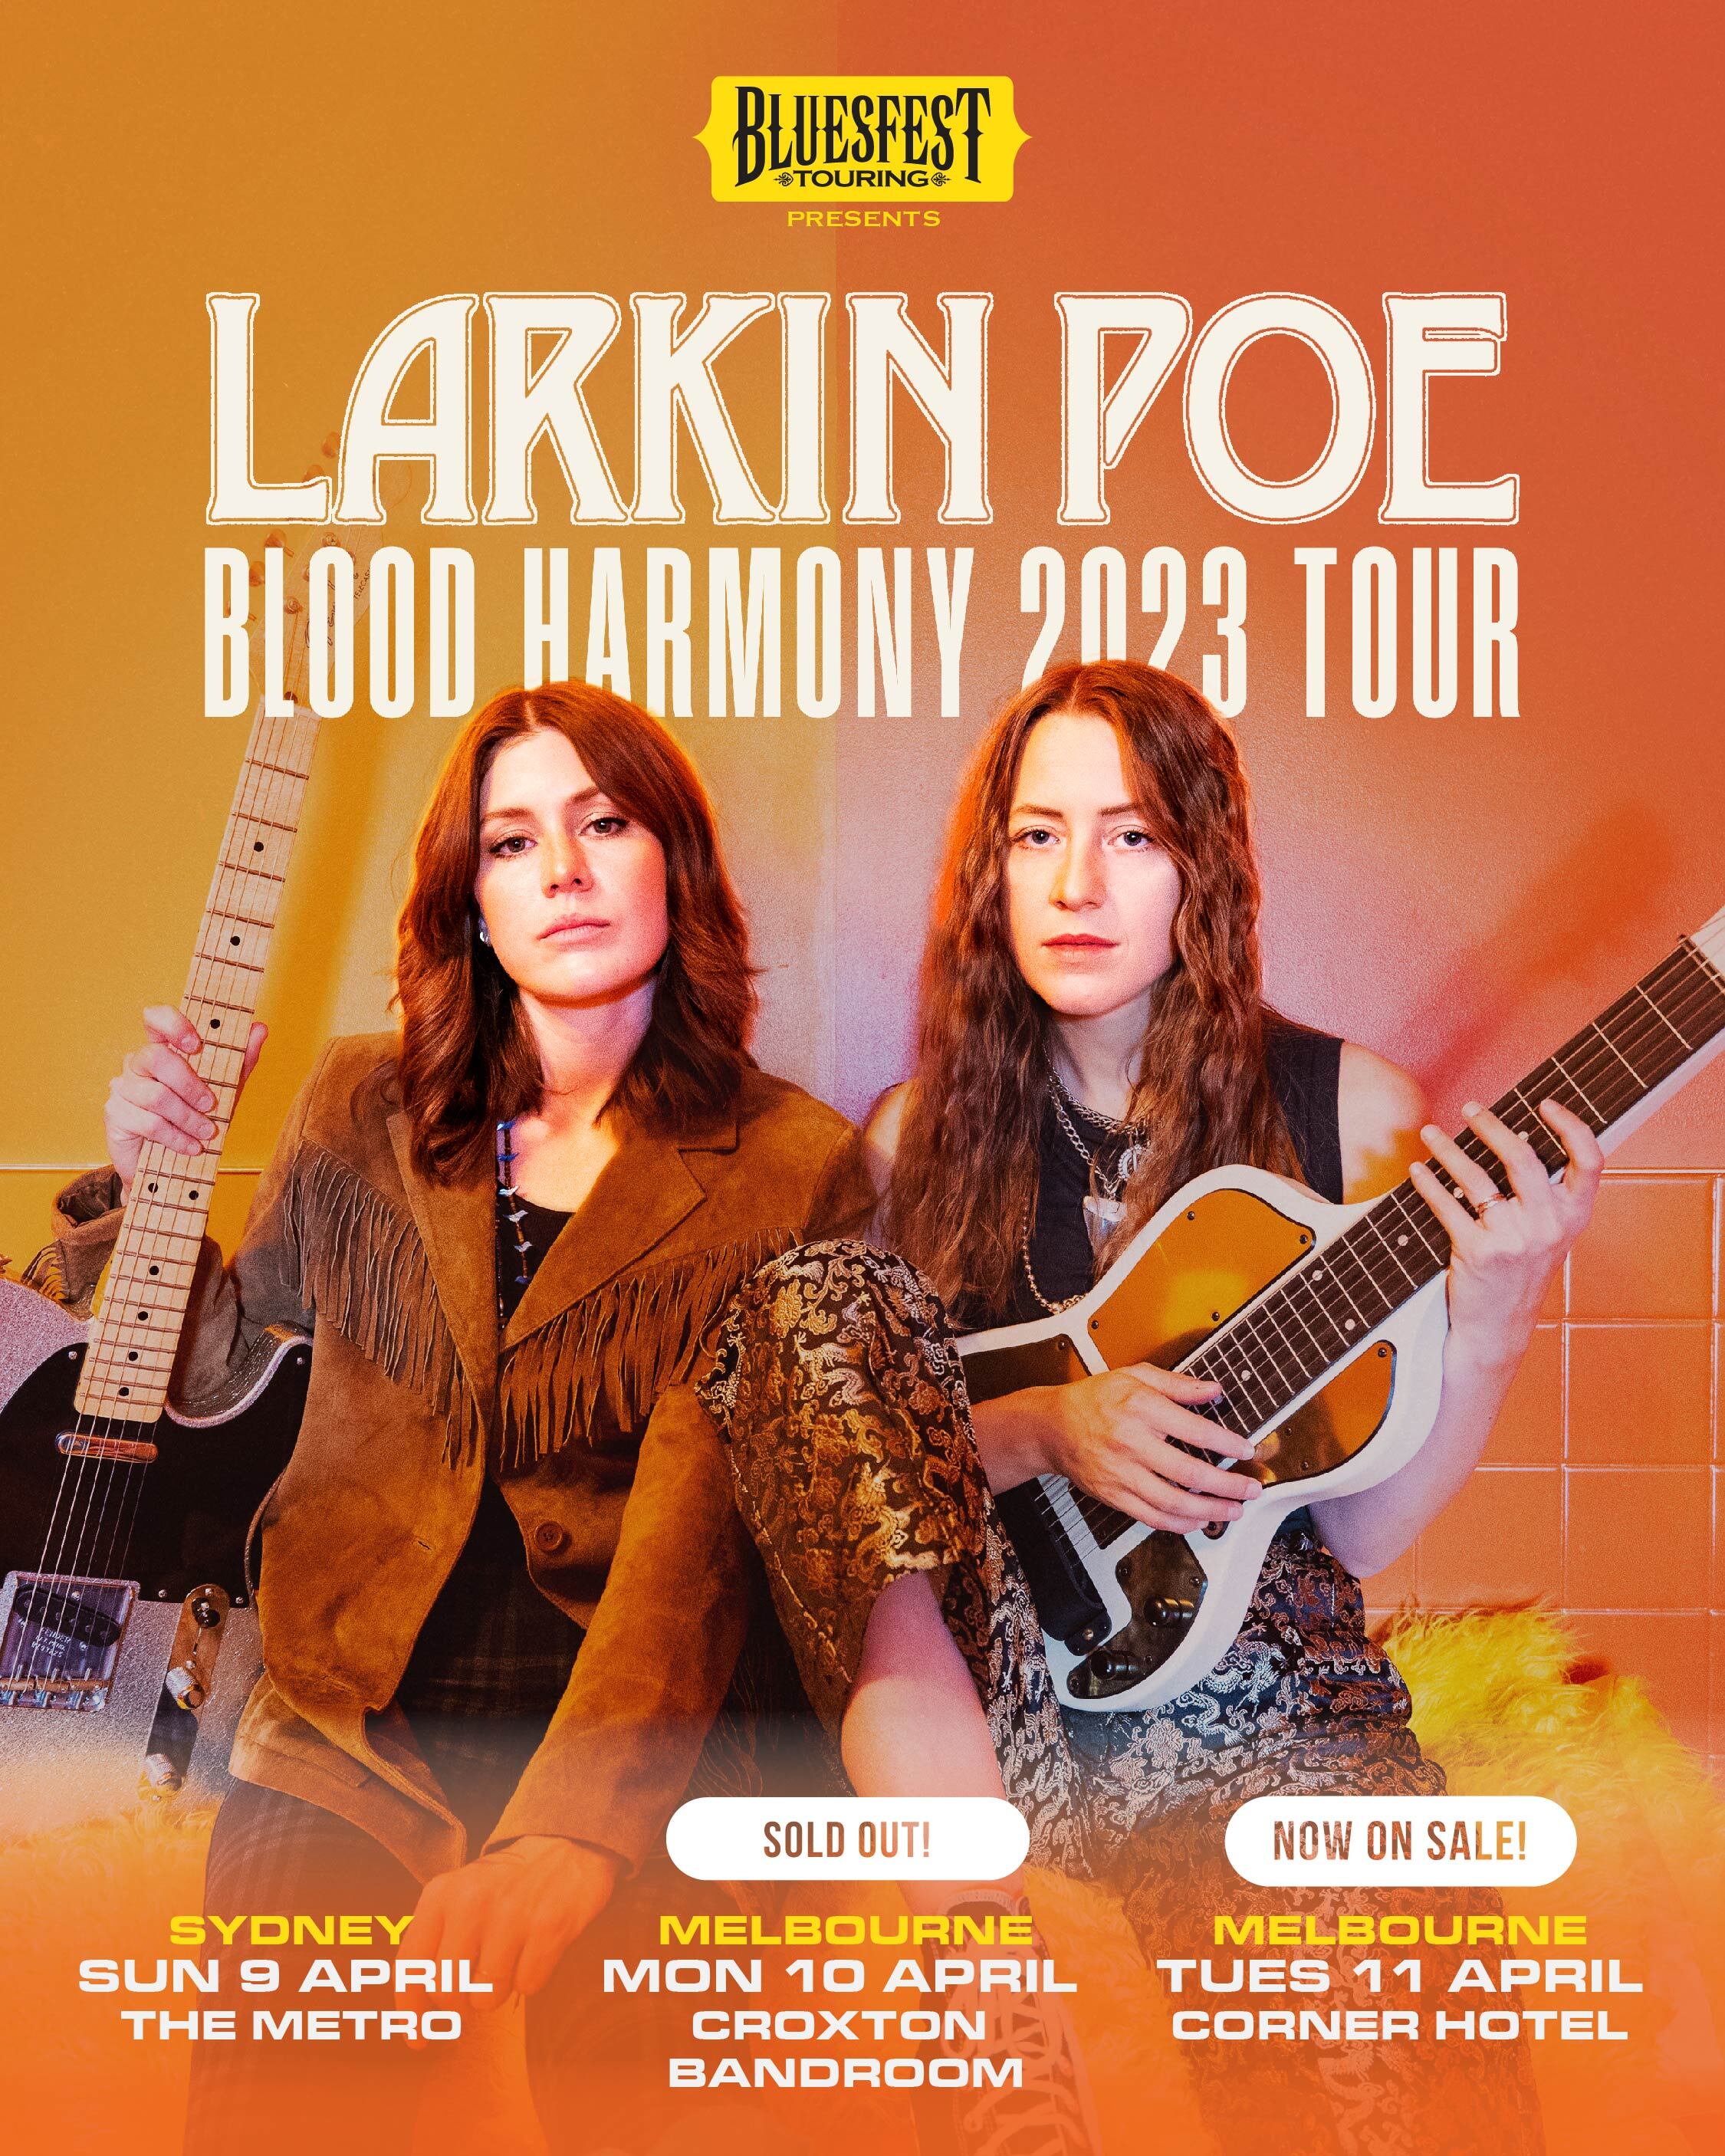 Blood Harmony 2023 Tour T-Shirt | T-SHIRTS | Larkin Poe